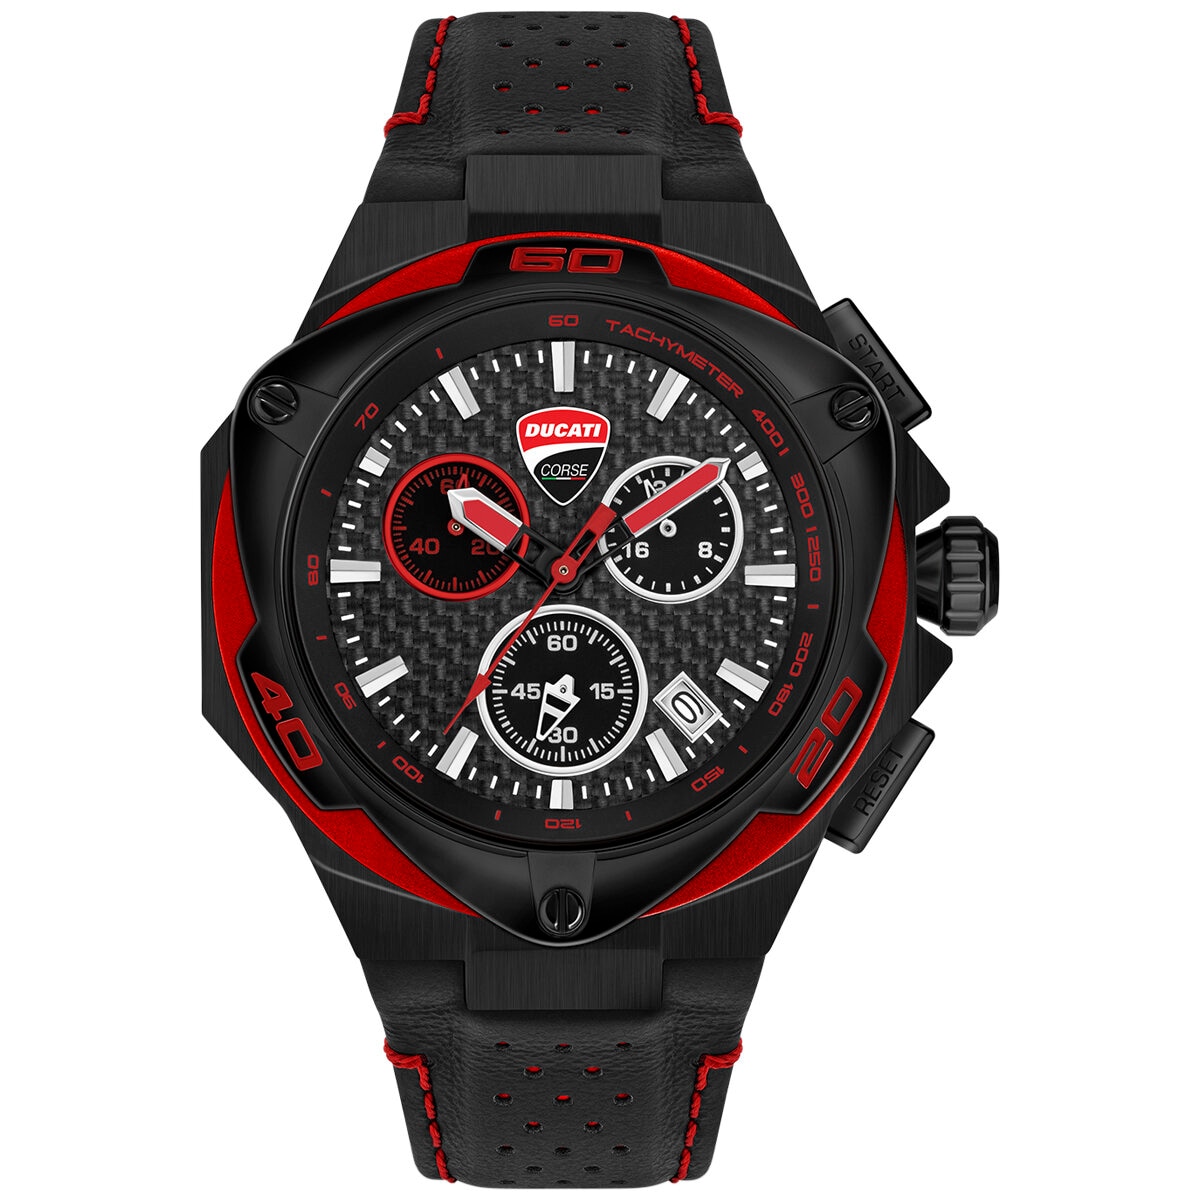 Ducati Motore Chronograph Black Leather Watch